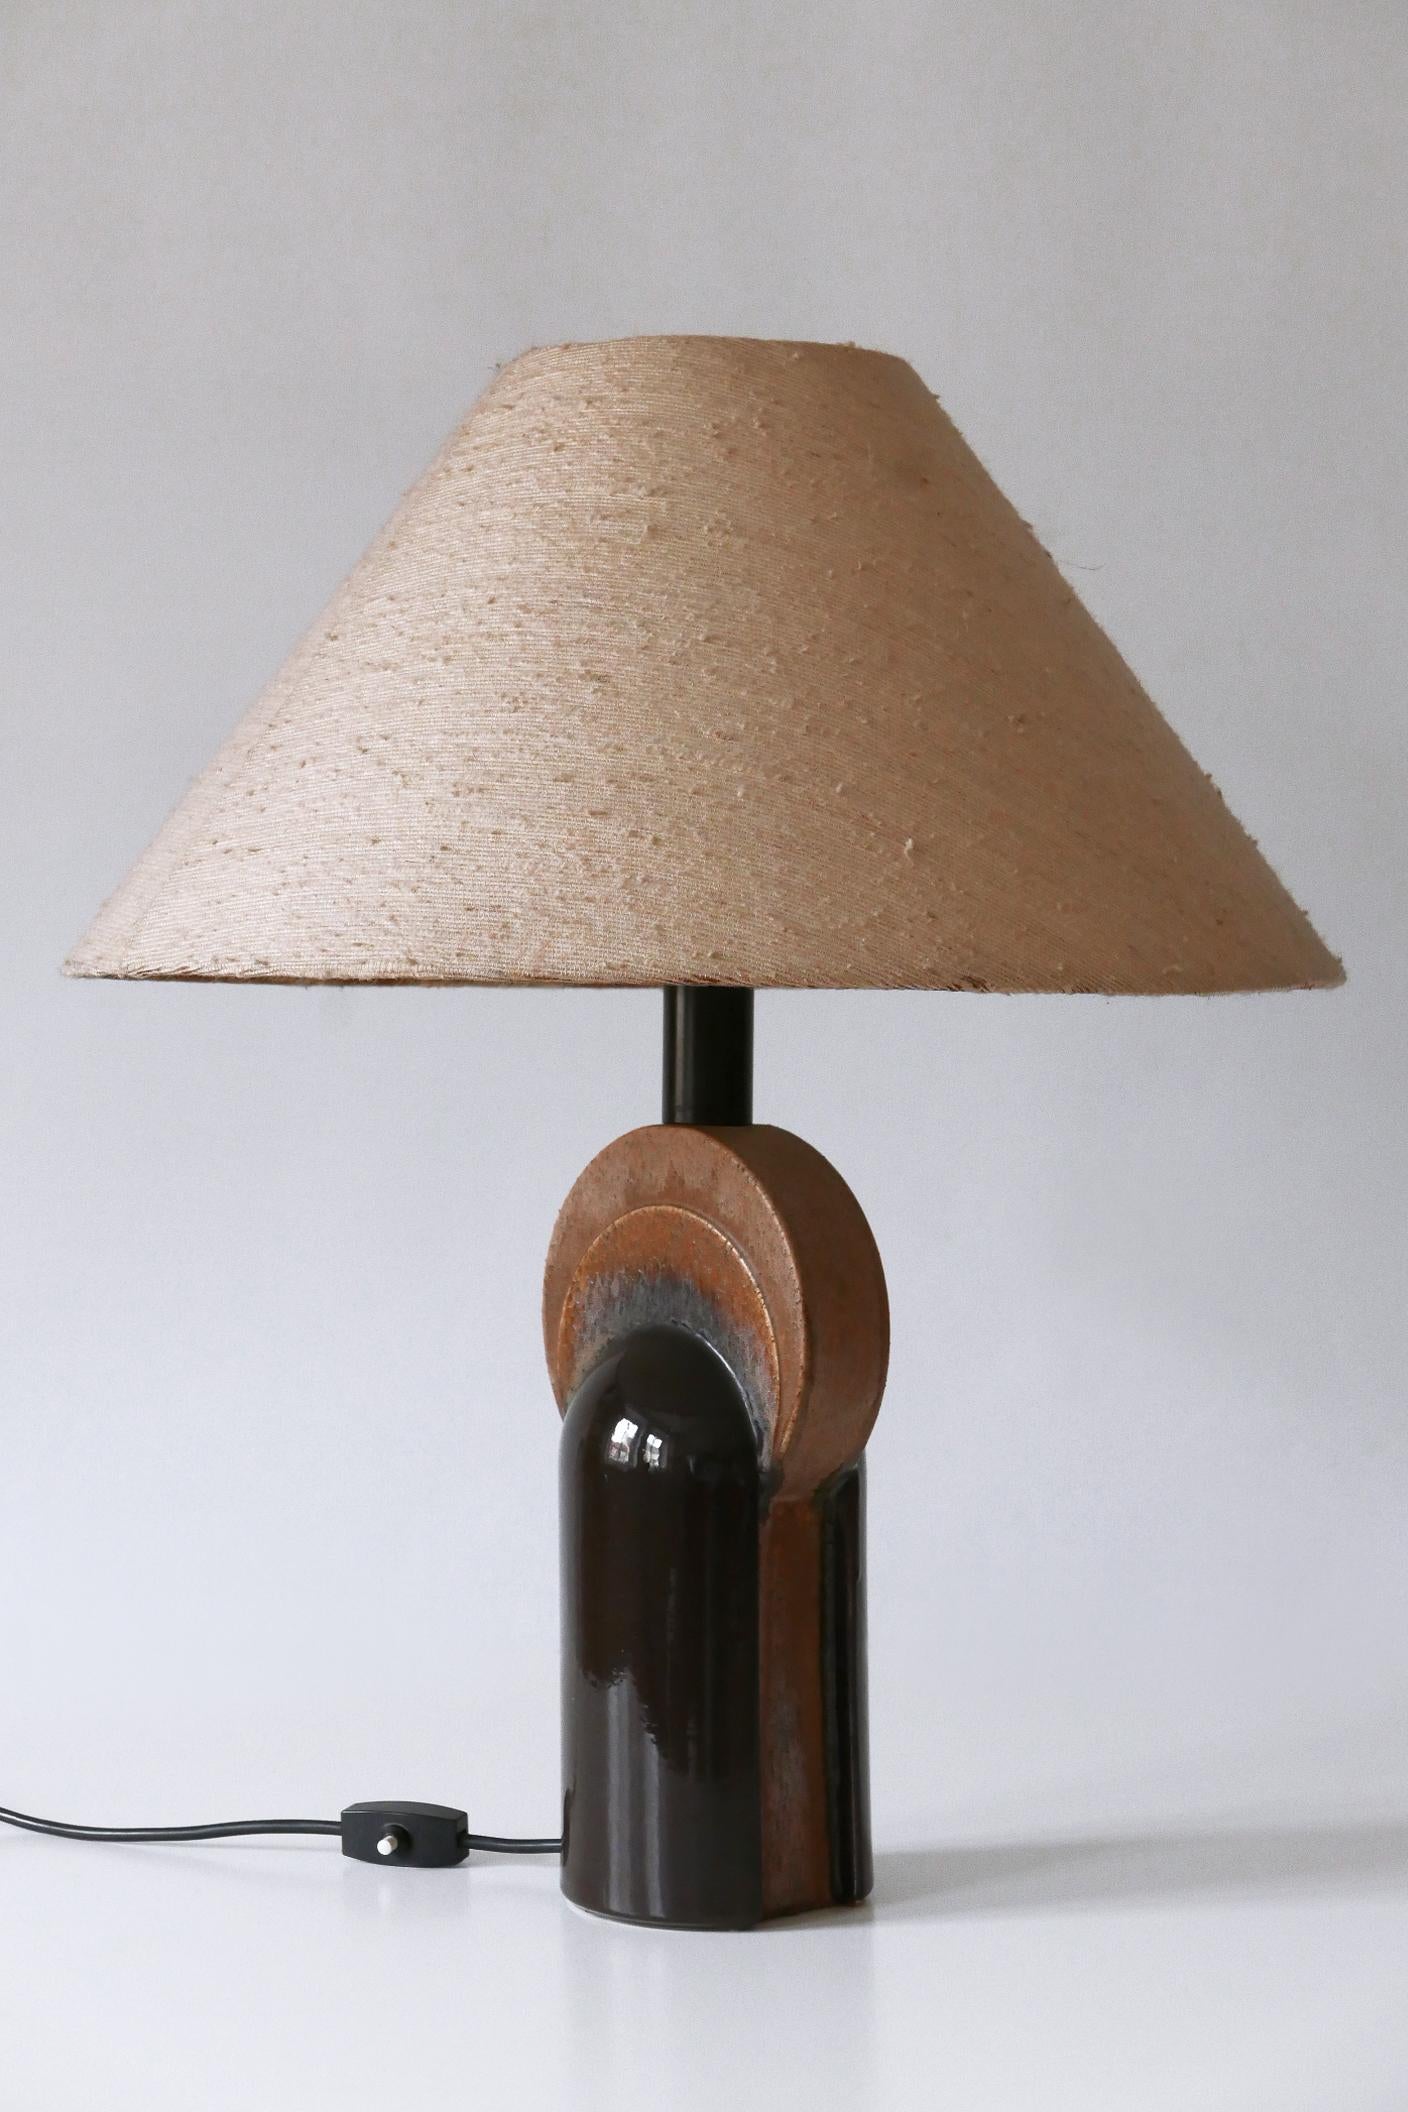 Elegant Mid-Century Modern Ceramic Table Lamp by Leola Design Germany 1960s For Sale 2